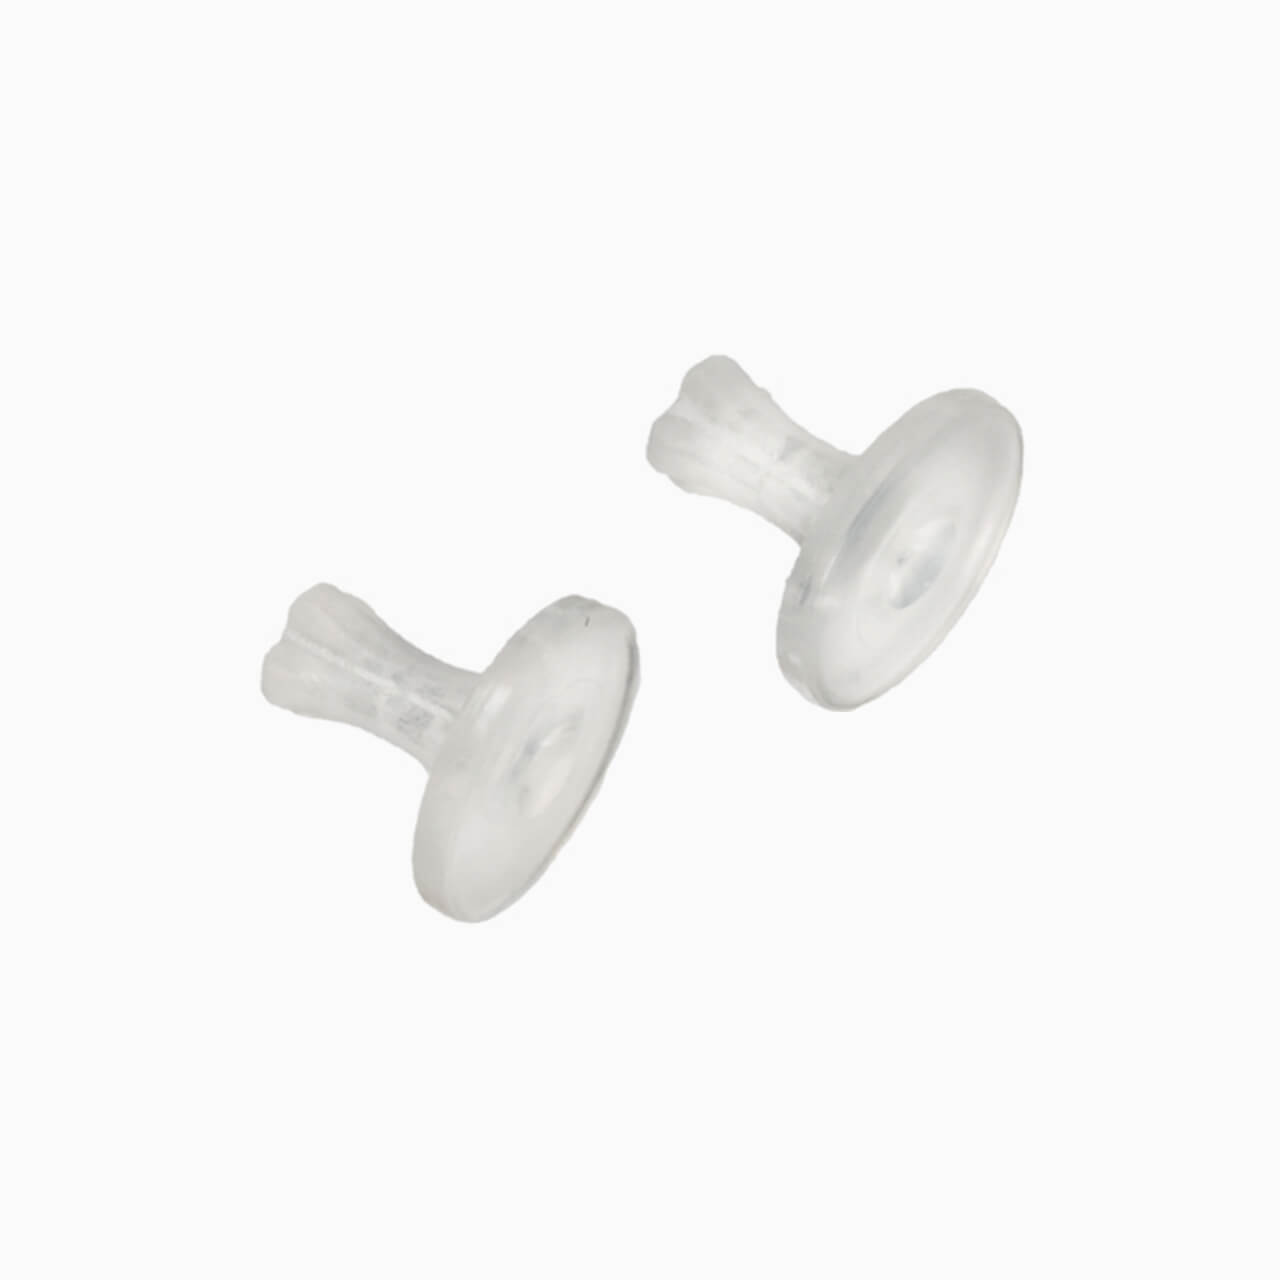 Plastic or rubber earring backs - LOX